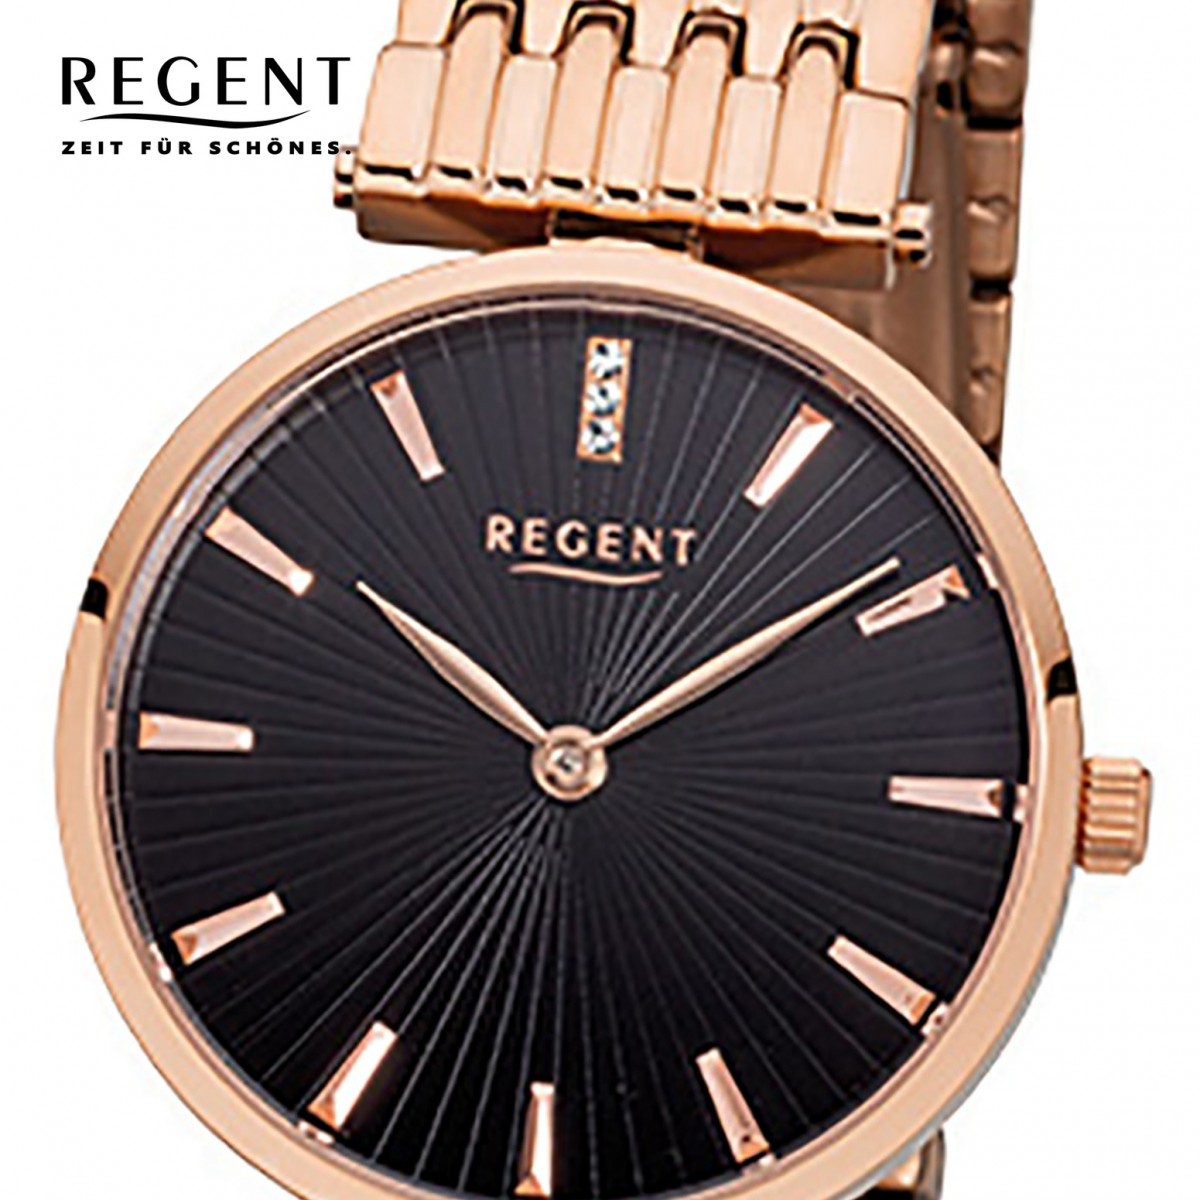 URF1059 32-F-1059 Quarz-Uhr Edelstahl-Armband Damen-Armbanduhr Regent rosegold